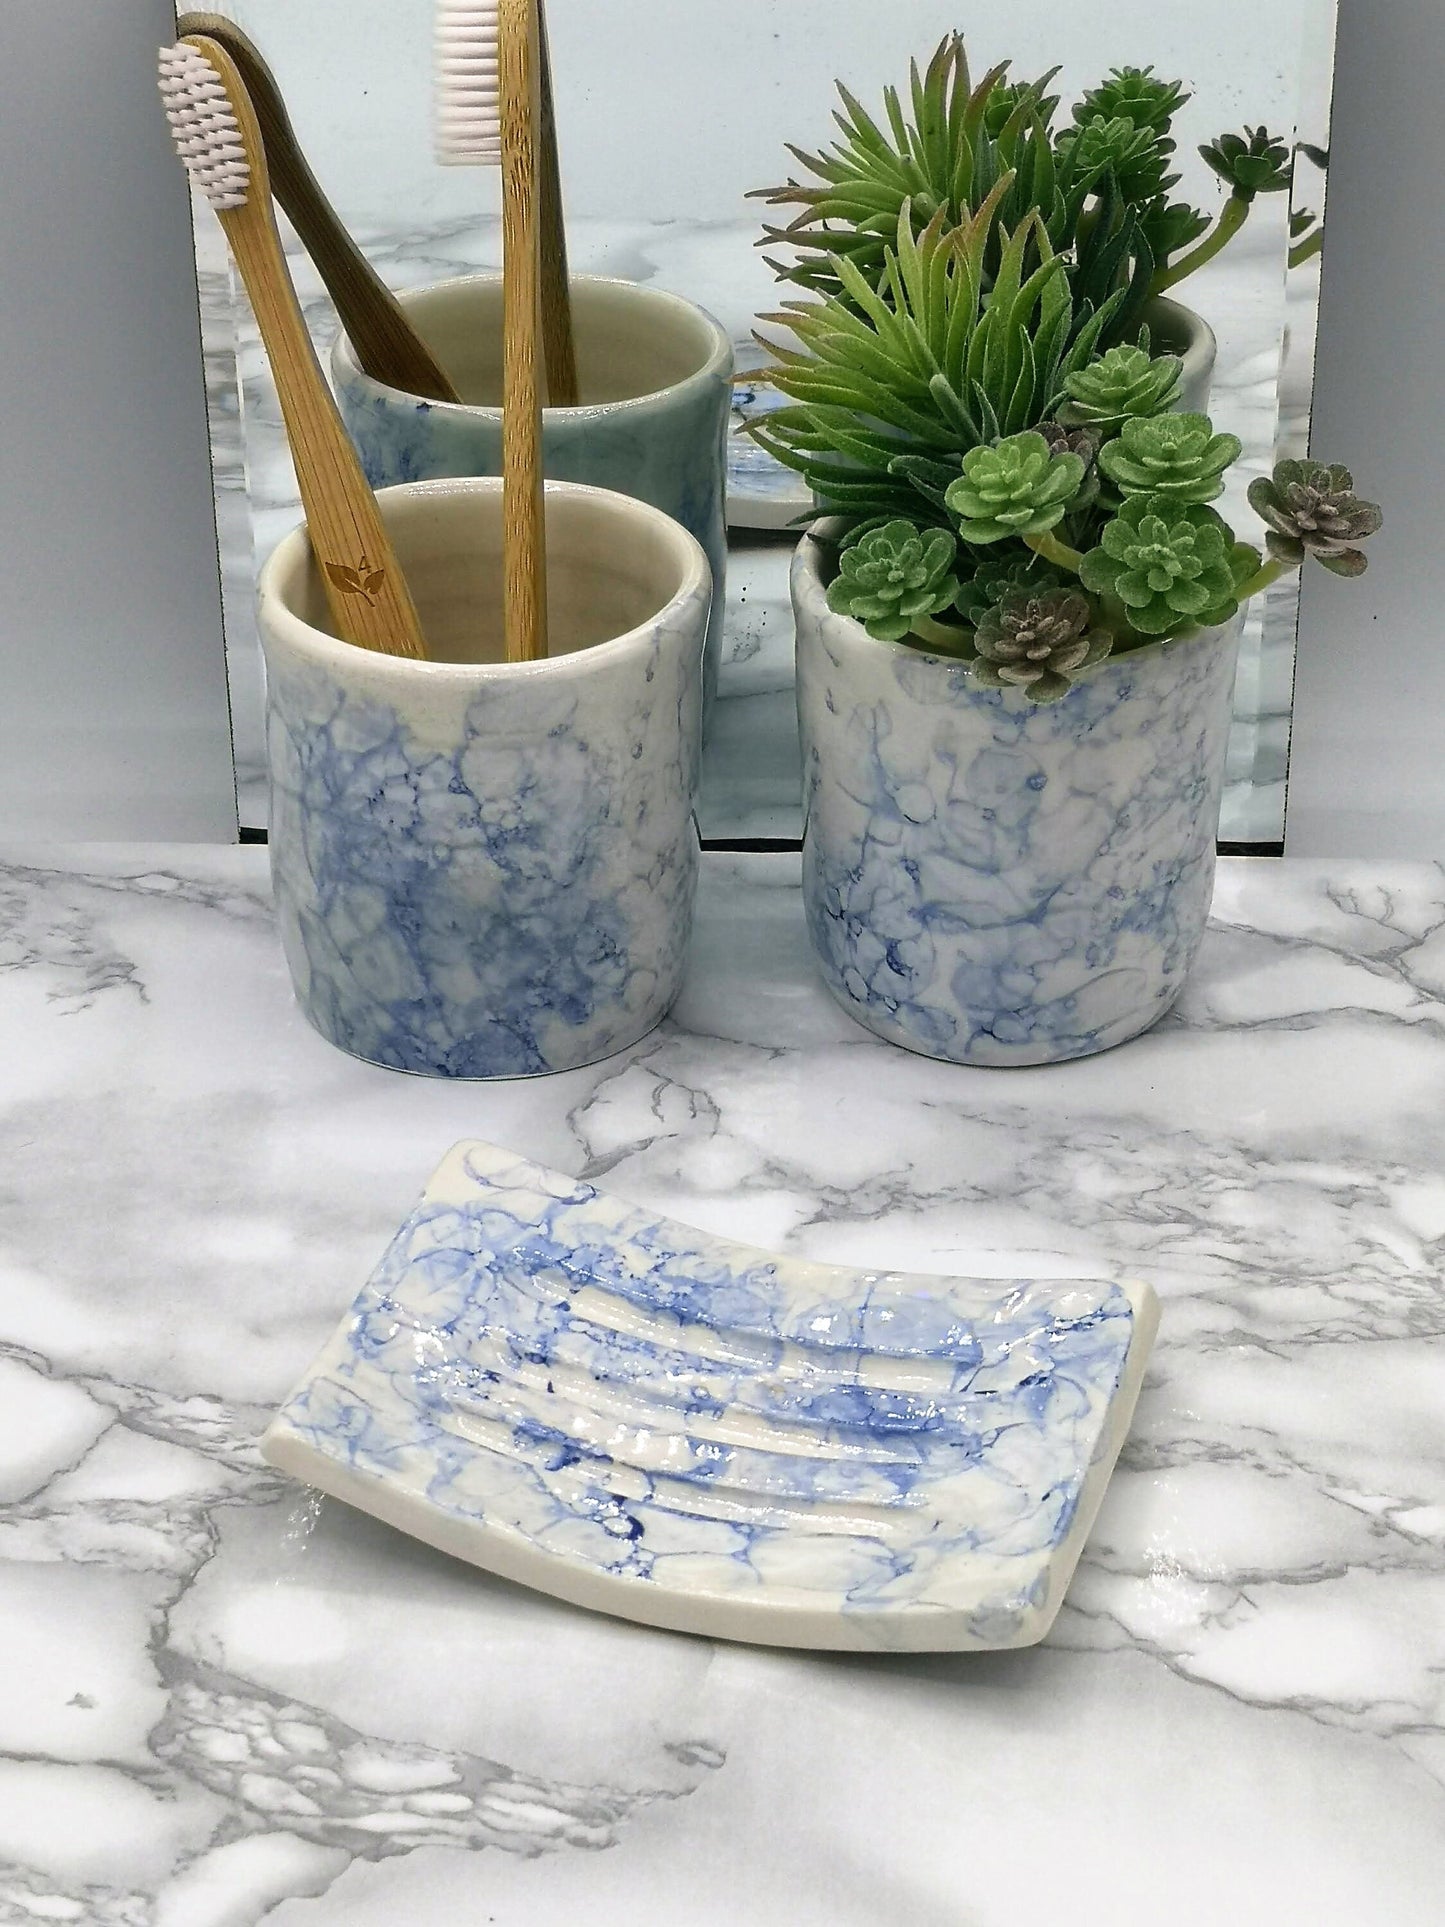 Handmade Ceramic Soap Dish 12cm/4.7in, Soap Bar Holder, Eco Friendly Bathroom Accessories, Zero Waste Clay Tray With Drain - Ceramica Ana Rafael